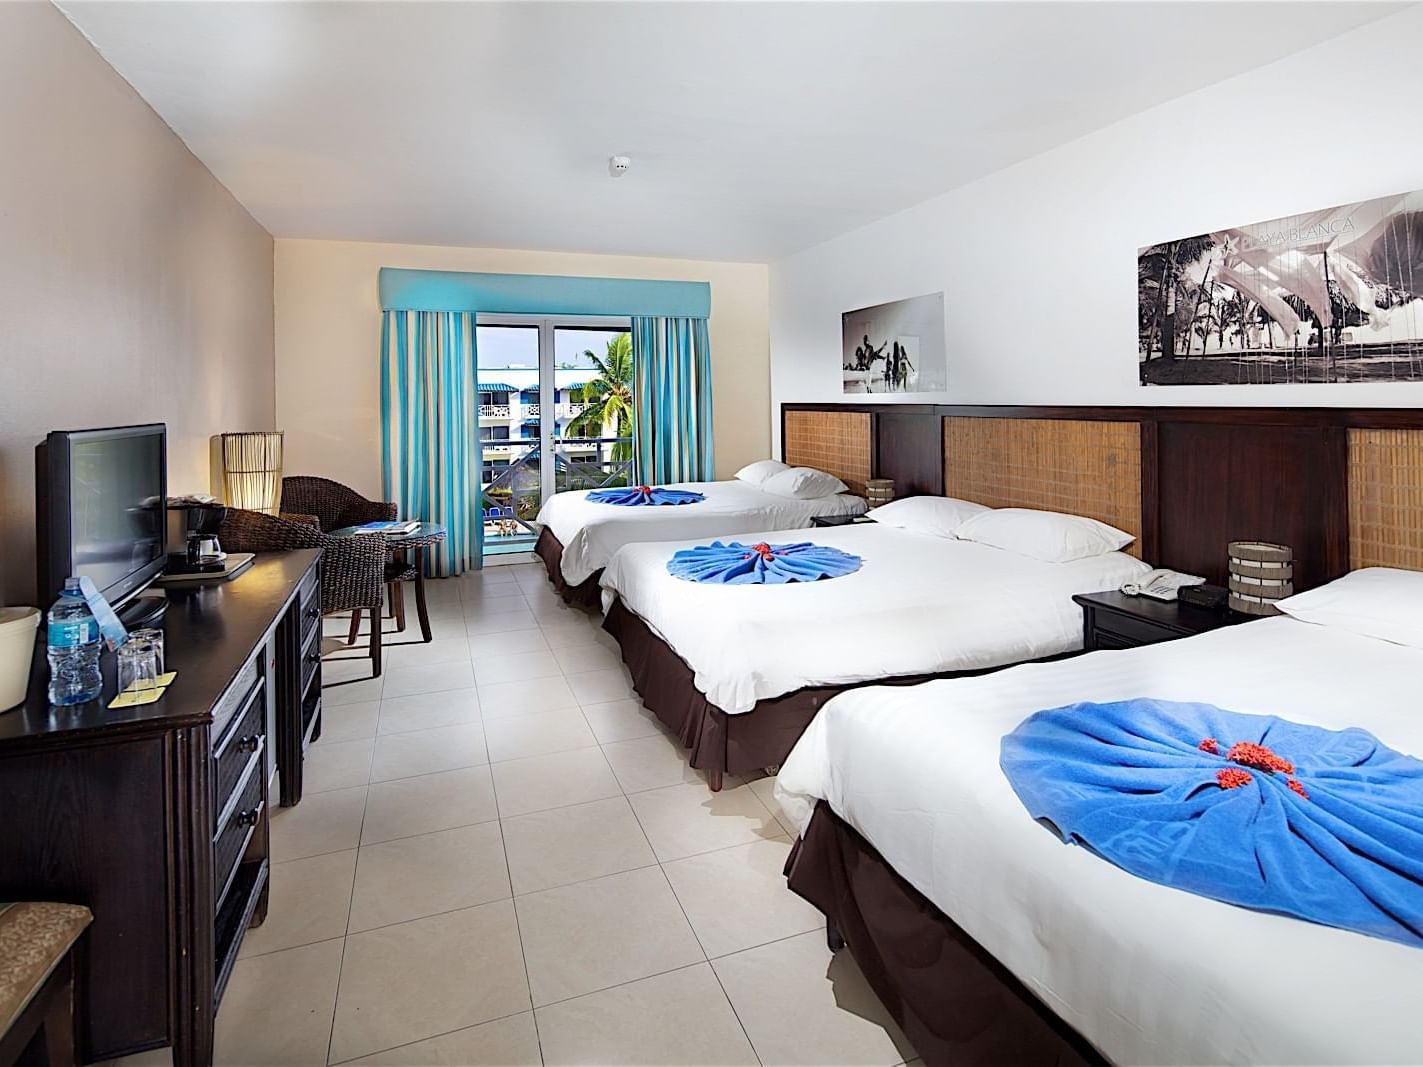 Interior of Suite de lujo bedroom at Playa Blanca Beach Resort